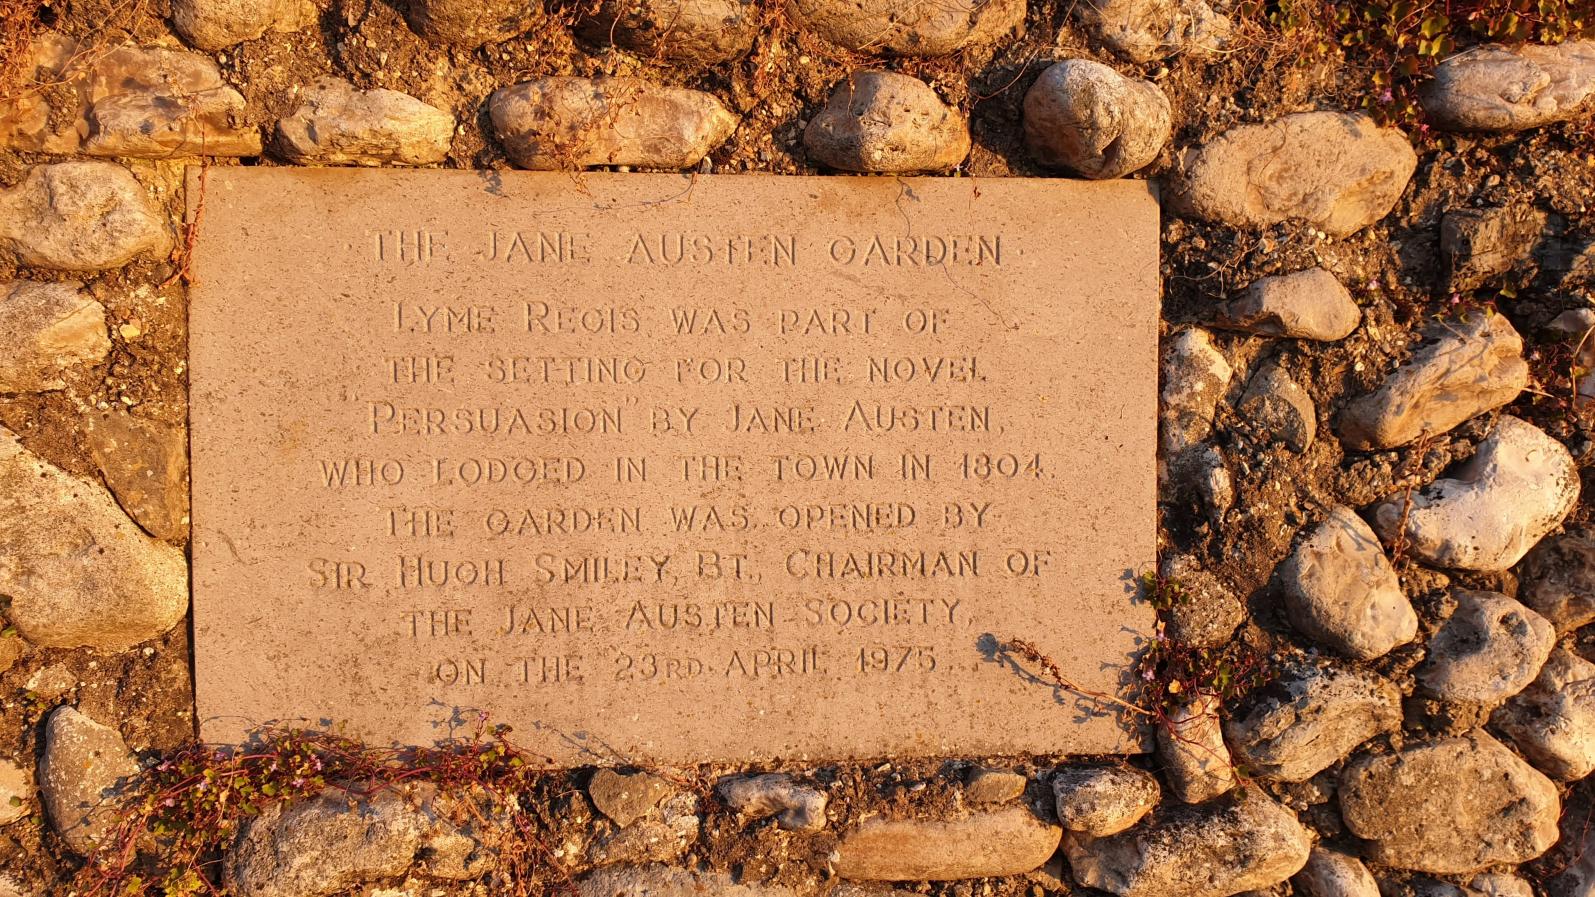 Stone plaque in Jane Austen garden Lyme Regis